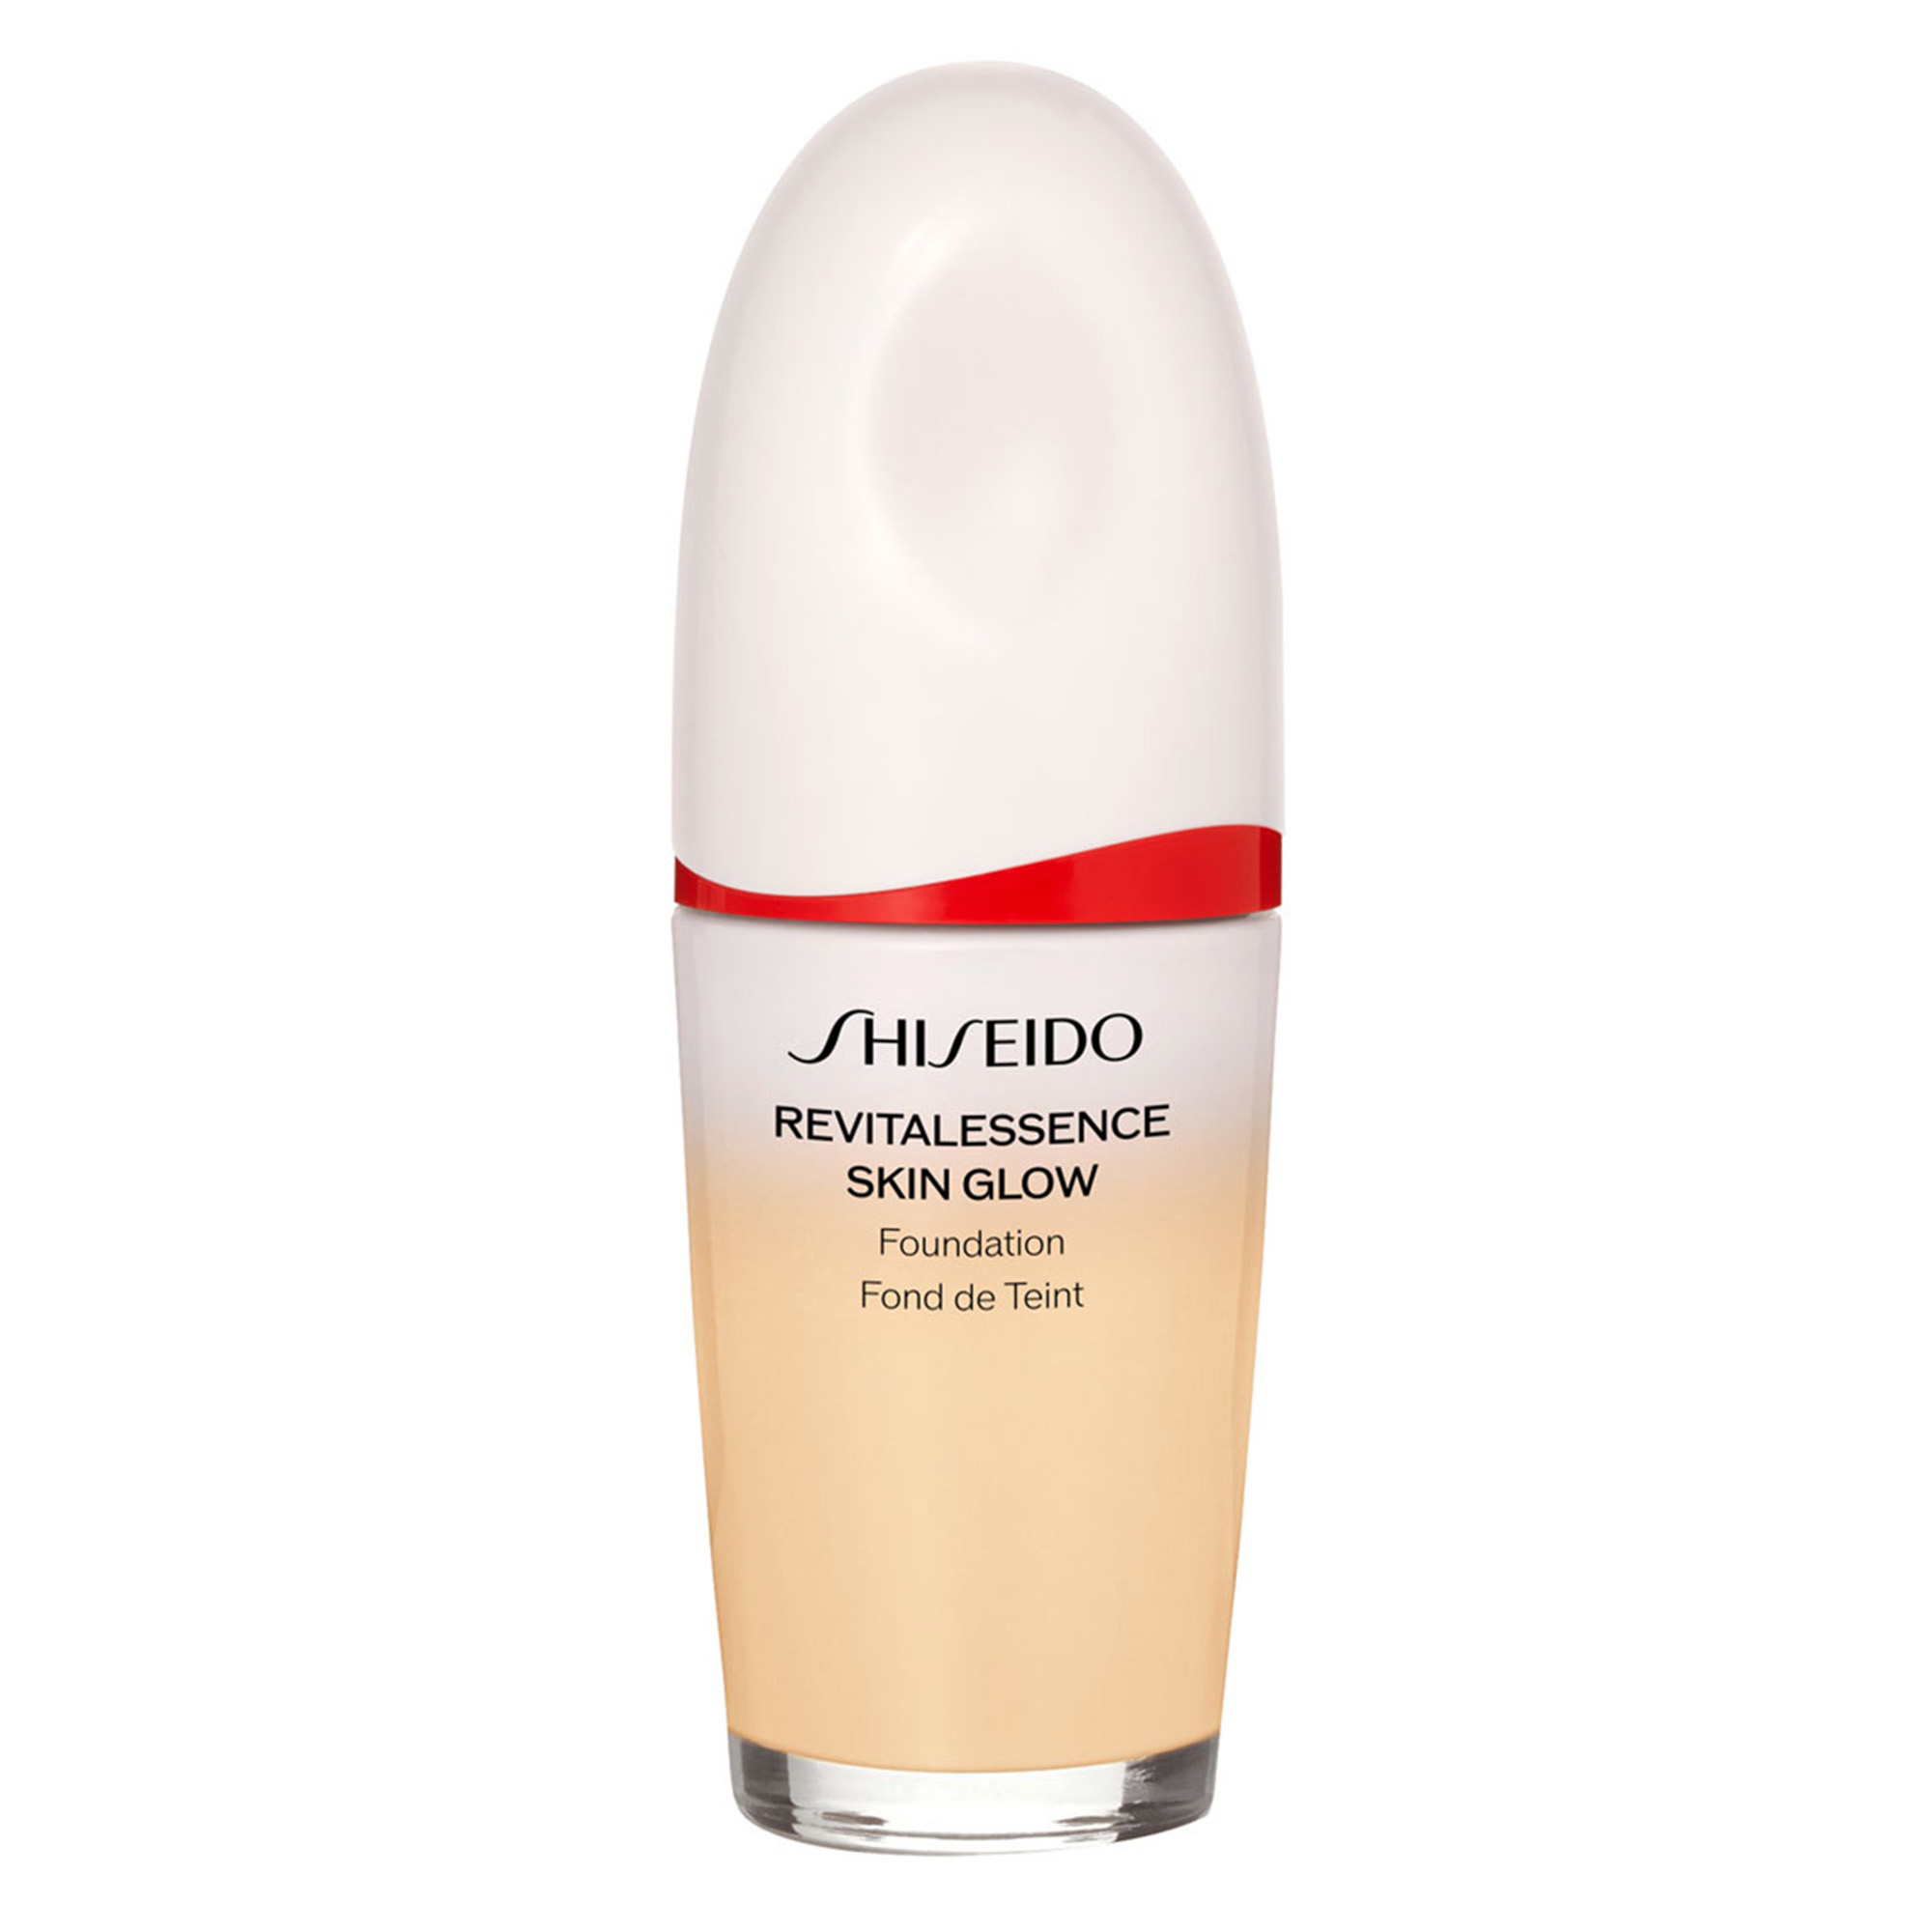 Shiseido Revitalessence Skin Glow Foundation Spf 30 Pa+++ - Fondöten |  Makyaj Trendi